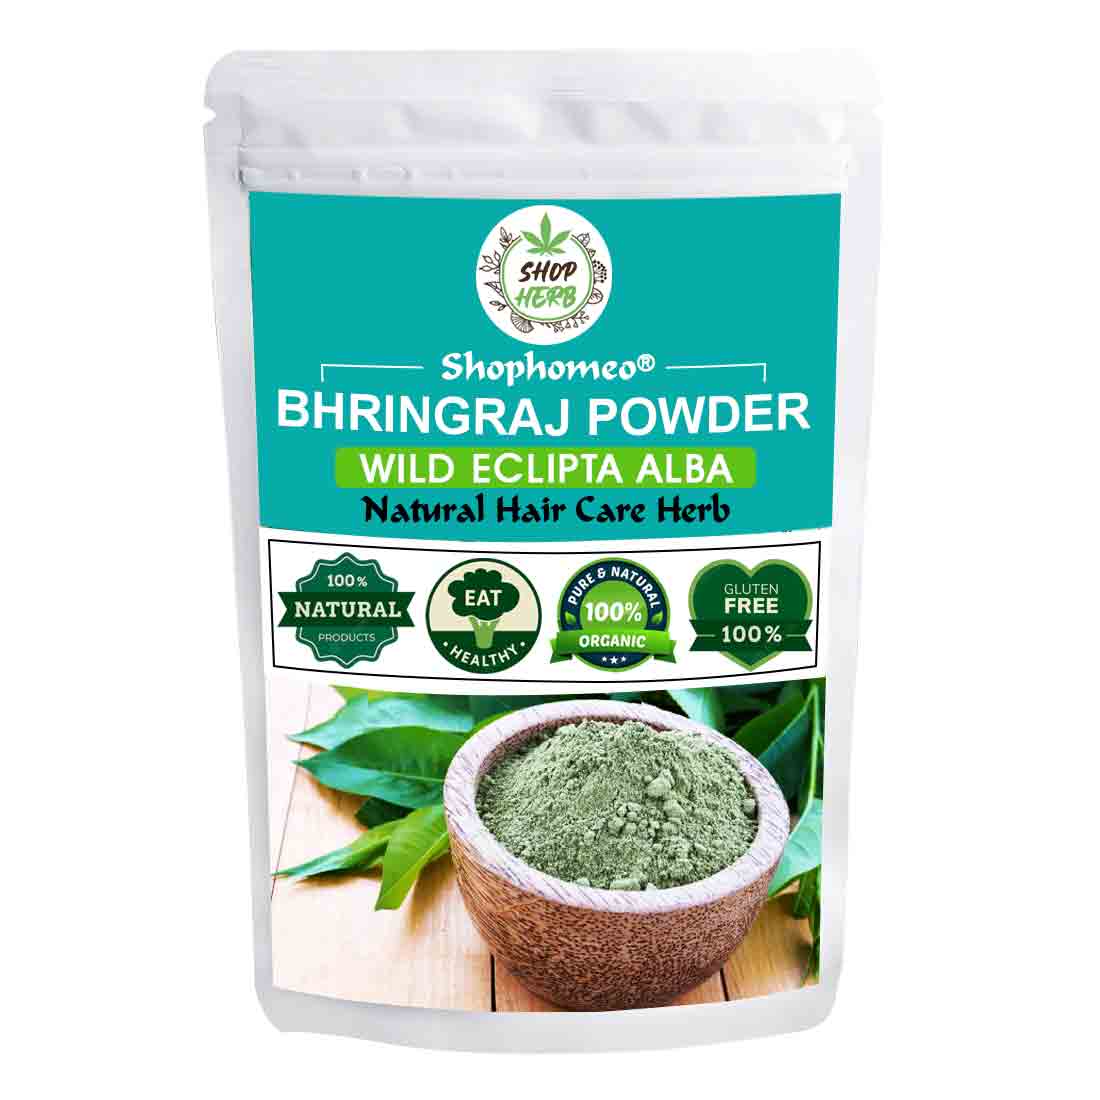 Wonderful Health Benefits of Bhringraj Powder